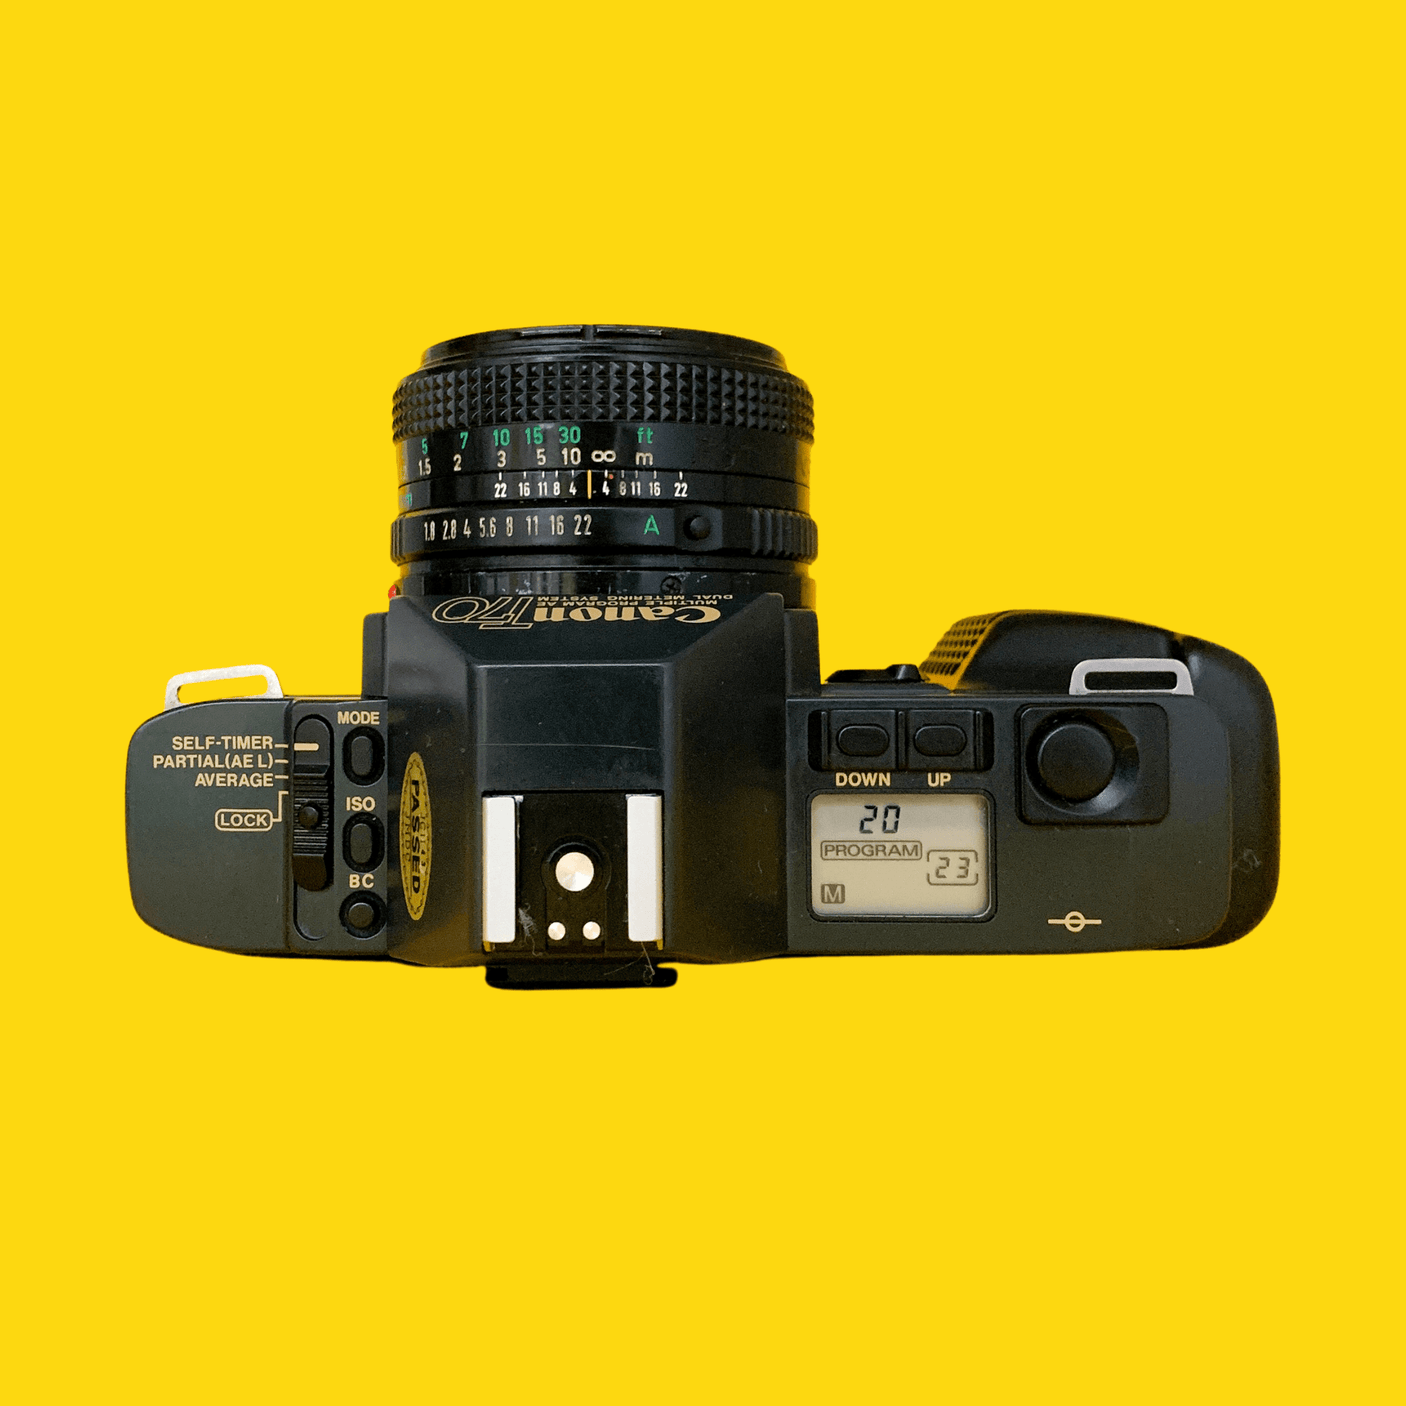 Canon T70 35mm SLR Film Camera w/ 50mm Canon Lens